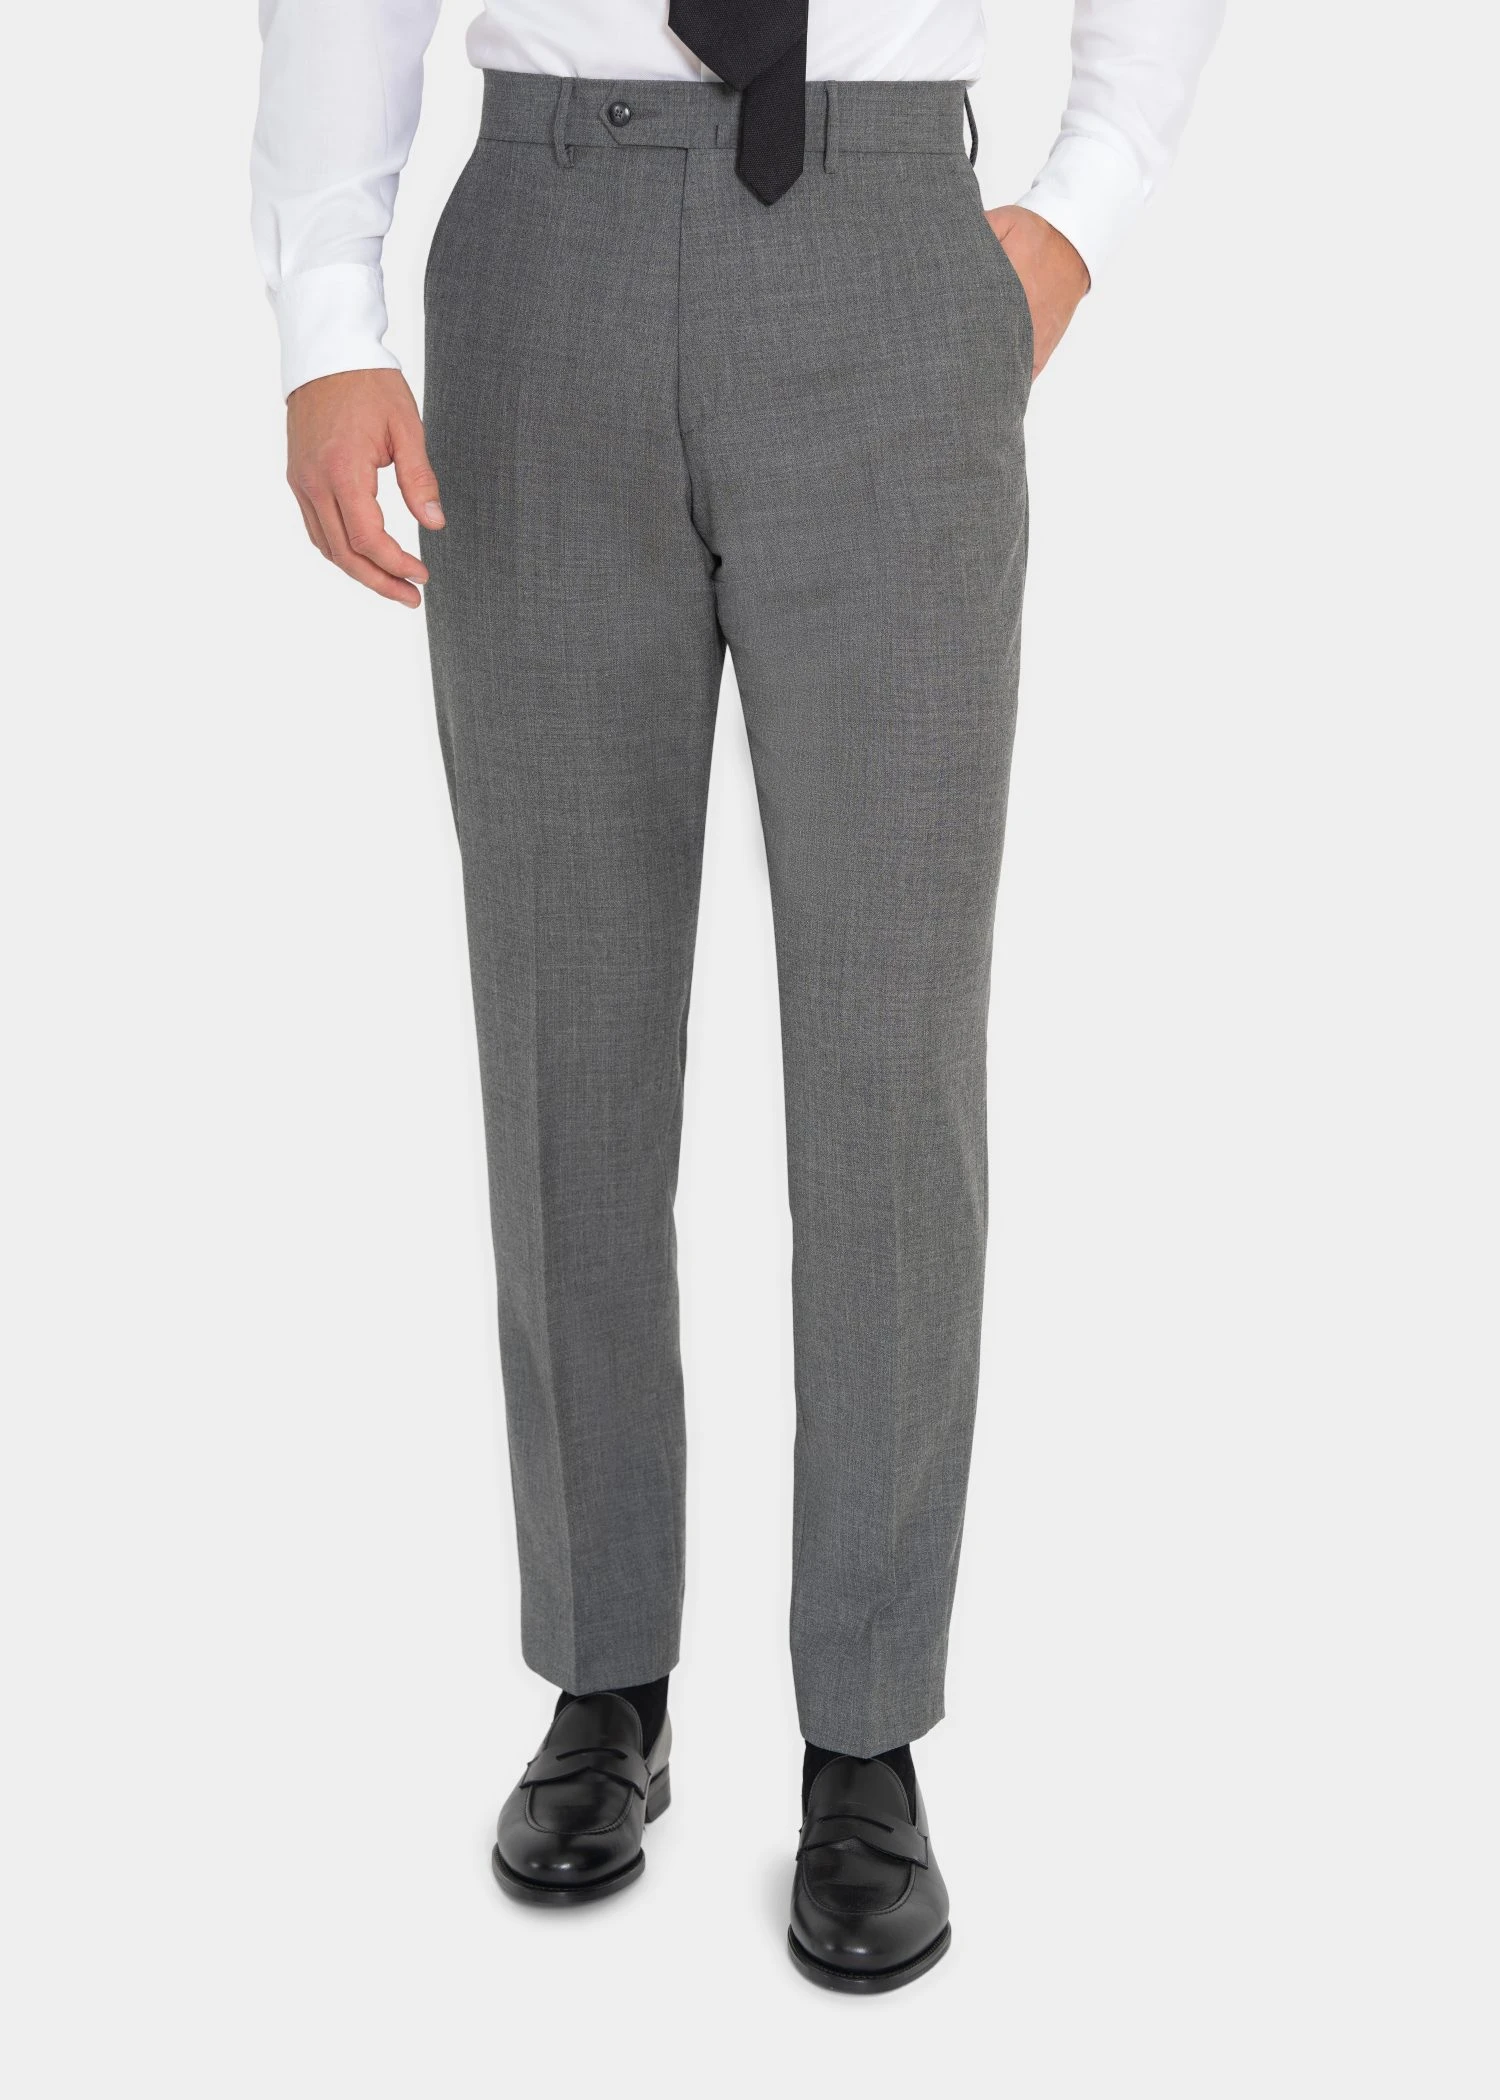 medium grey suit trousers in twistair fabric